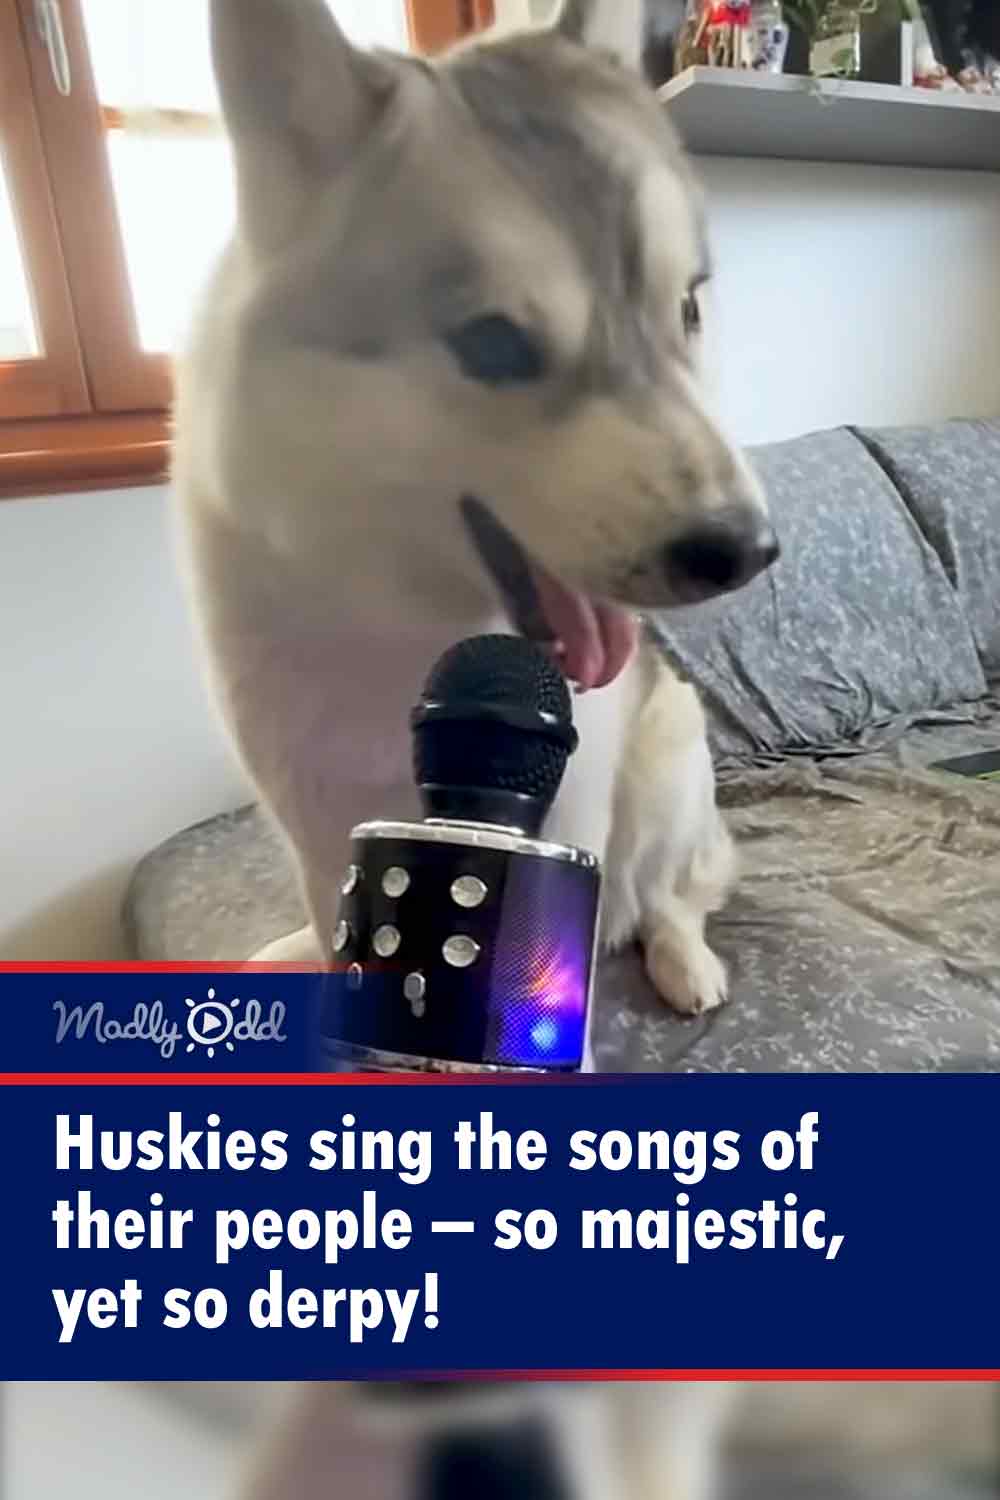 Huskies sing the songs of their people – so majestic, yet so derpy!